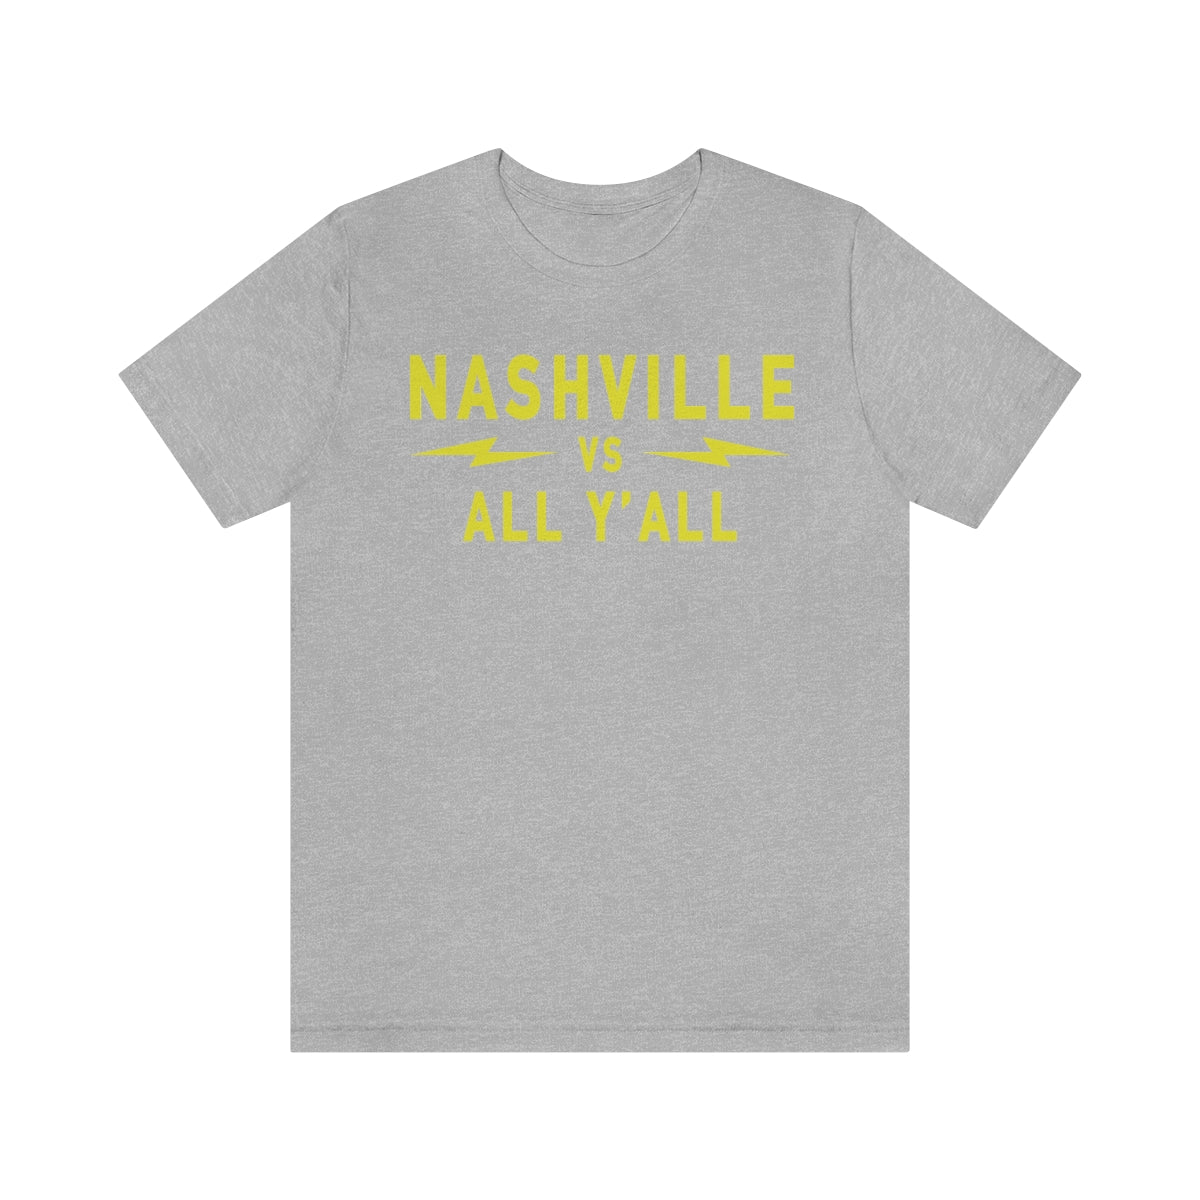 Nashville VS Modern Gold Large print Short Sleeve Tee